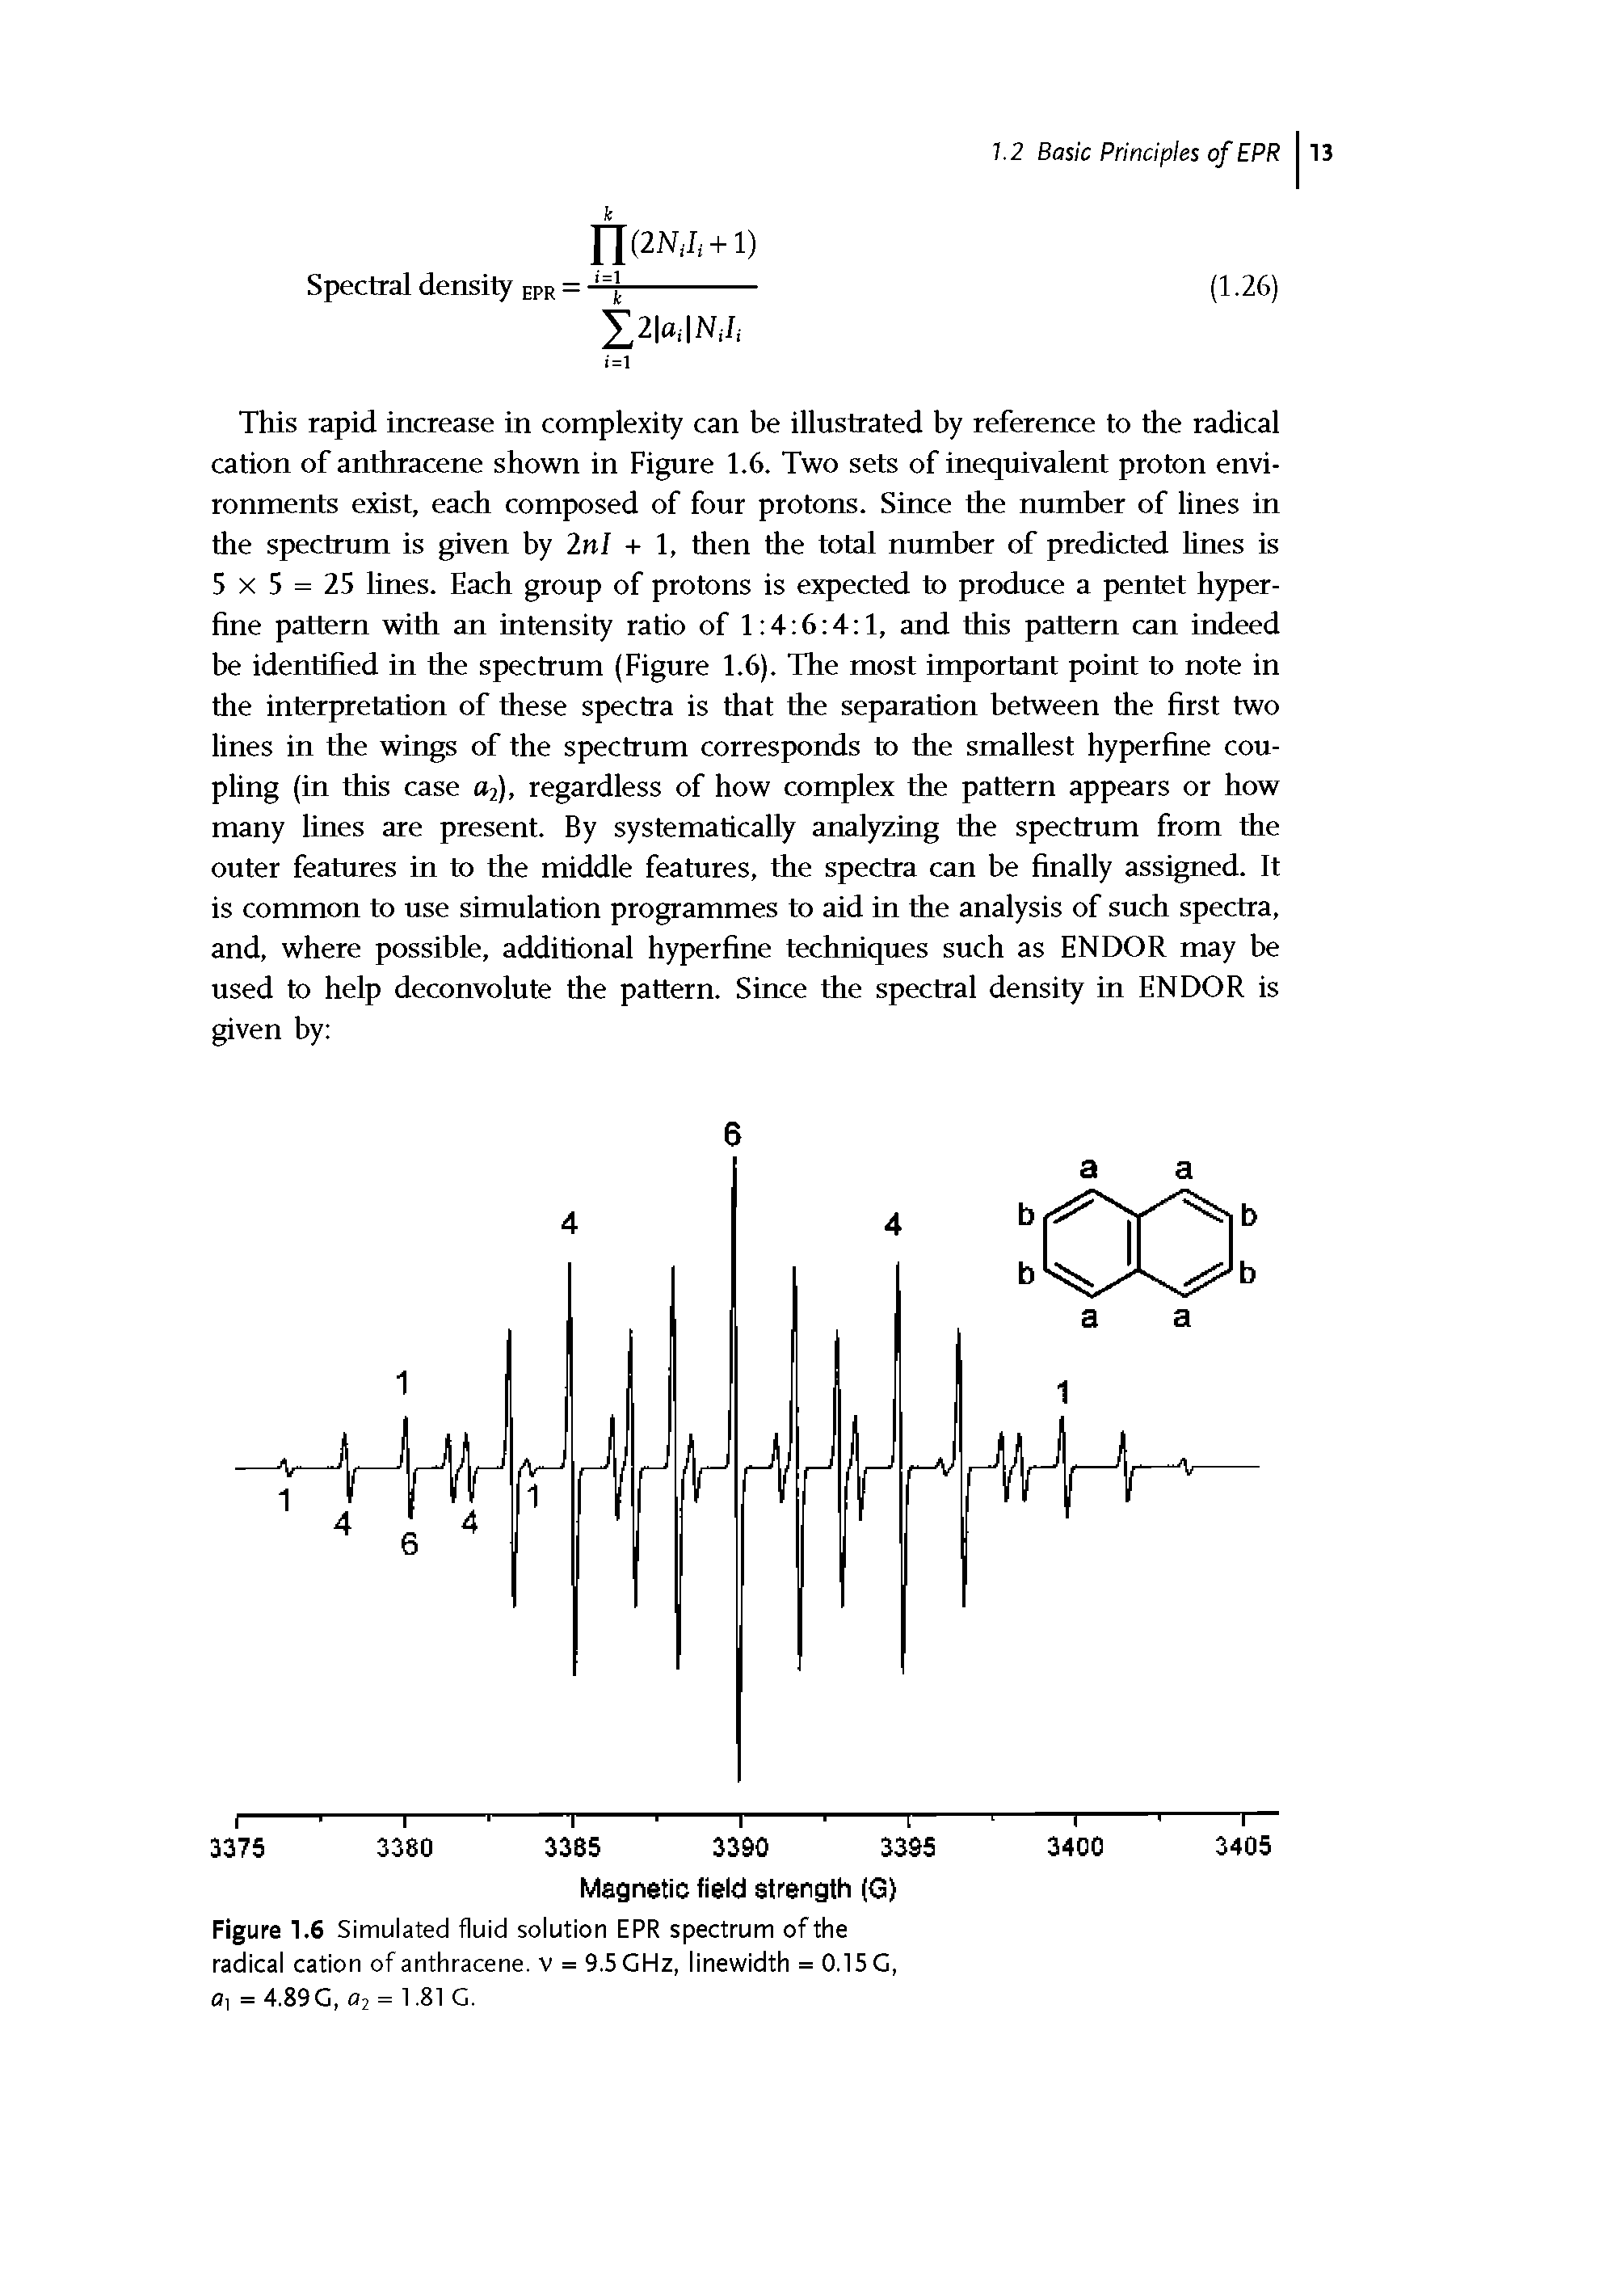 Figure 1.6 Simulated fluid solution EPR spectrum of the radical cation of anthracene, v = 9.5 GHz, llnewldth = 0.15 G, 0, = 4.89G, fl2 = 1-81 G.